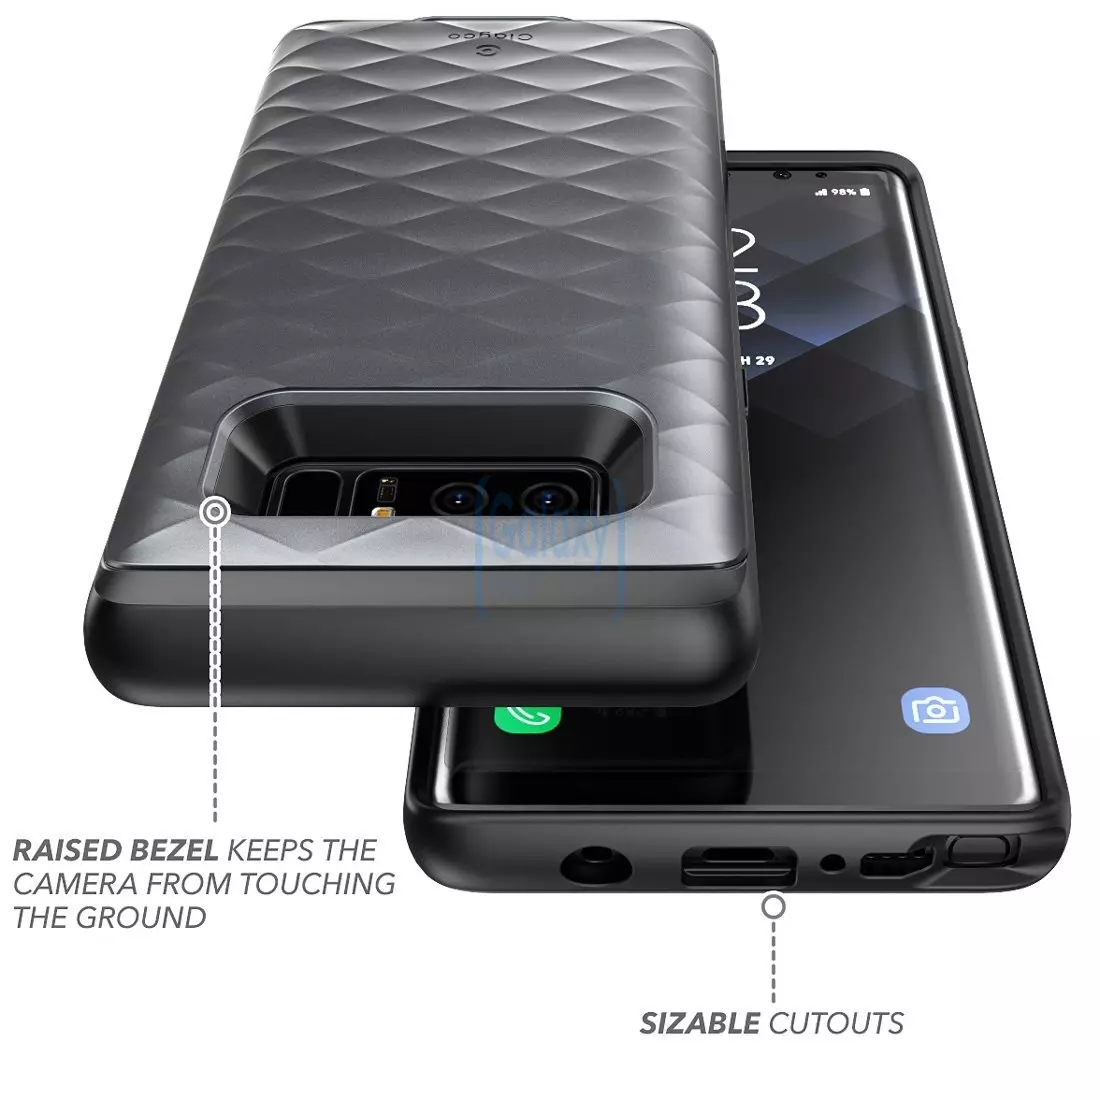 Чехол бампер Clayco Argos Case для Samsung Galaxy Note 8 N950 Black (Черный)